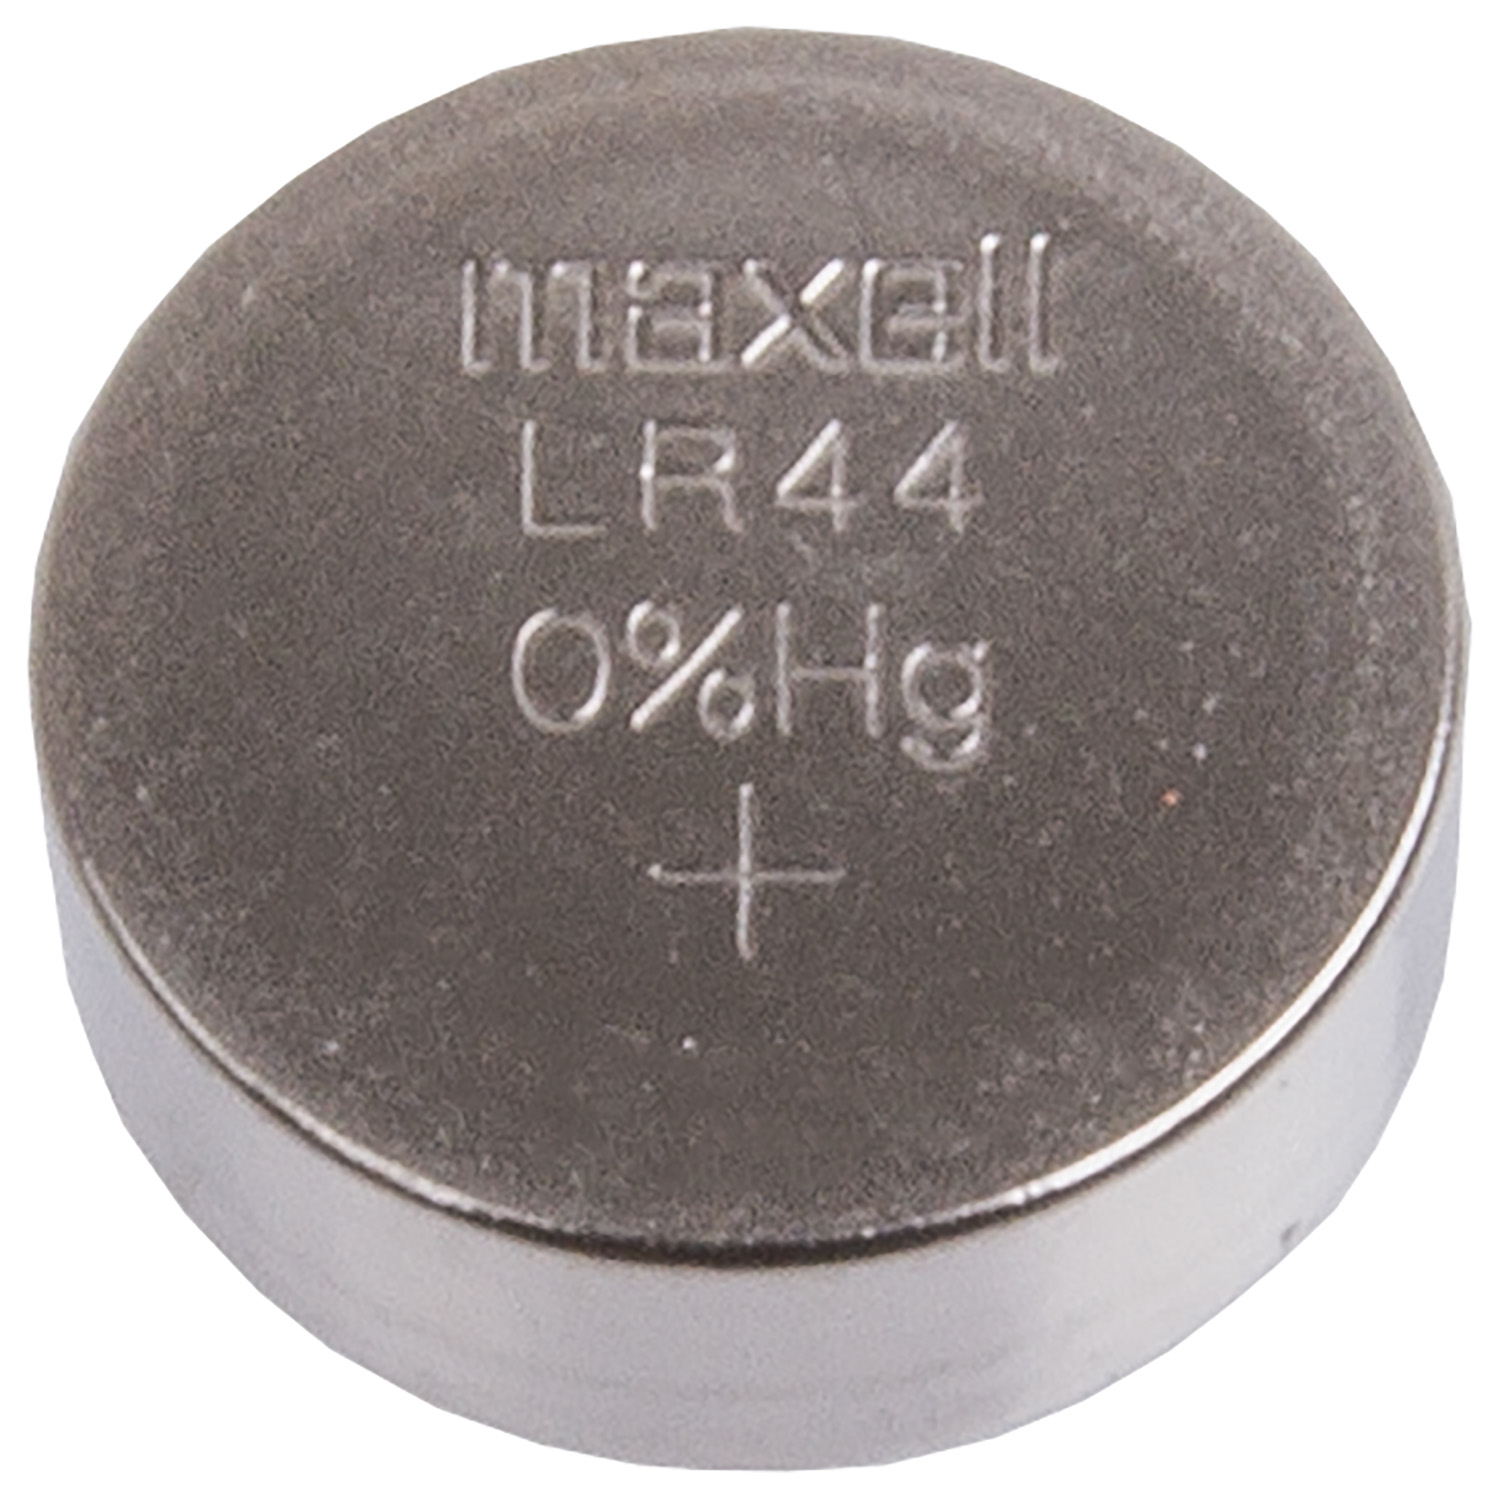 maxell LR44/AG13/A76/L1154F battery